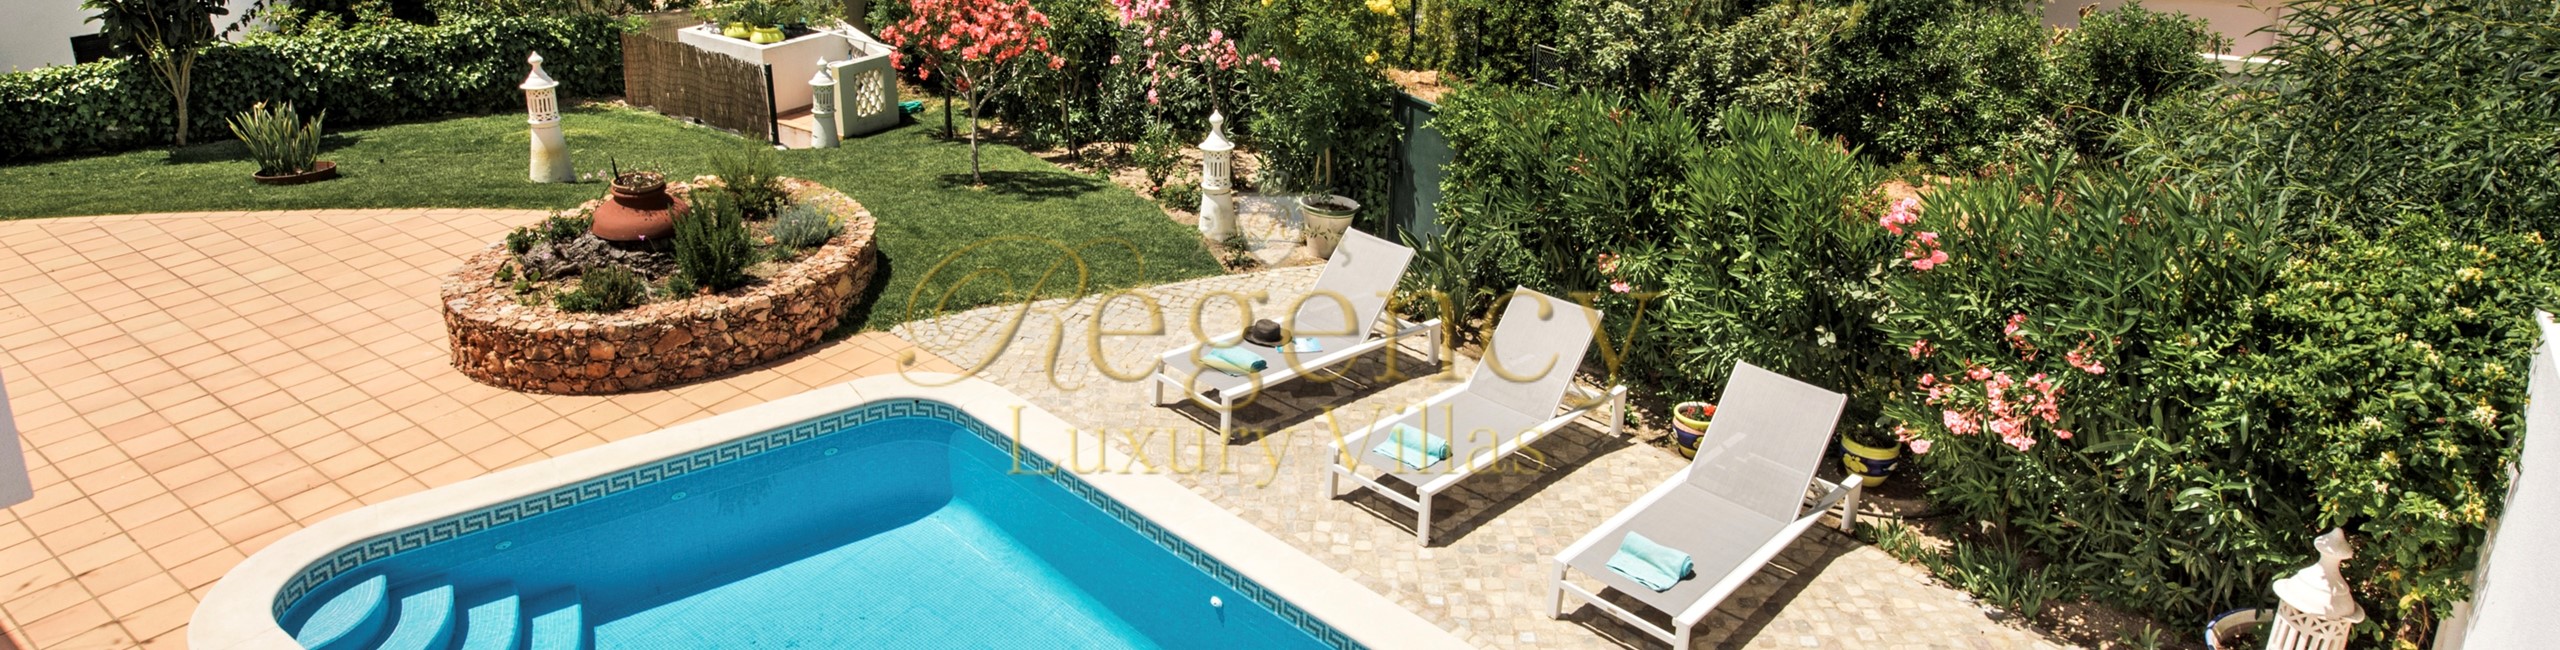 Luxury 3 Bedroom Villa To Rent Vale Do Lobo Near The Beach Algarve